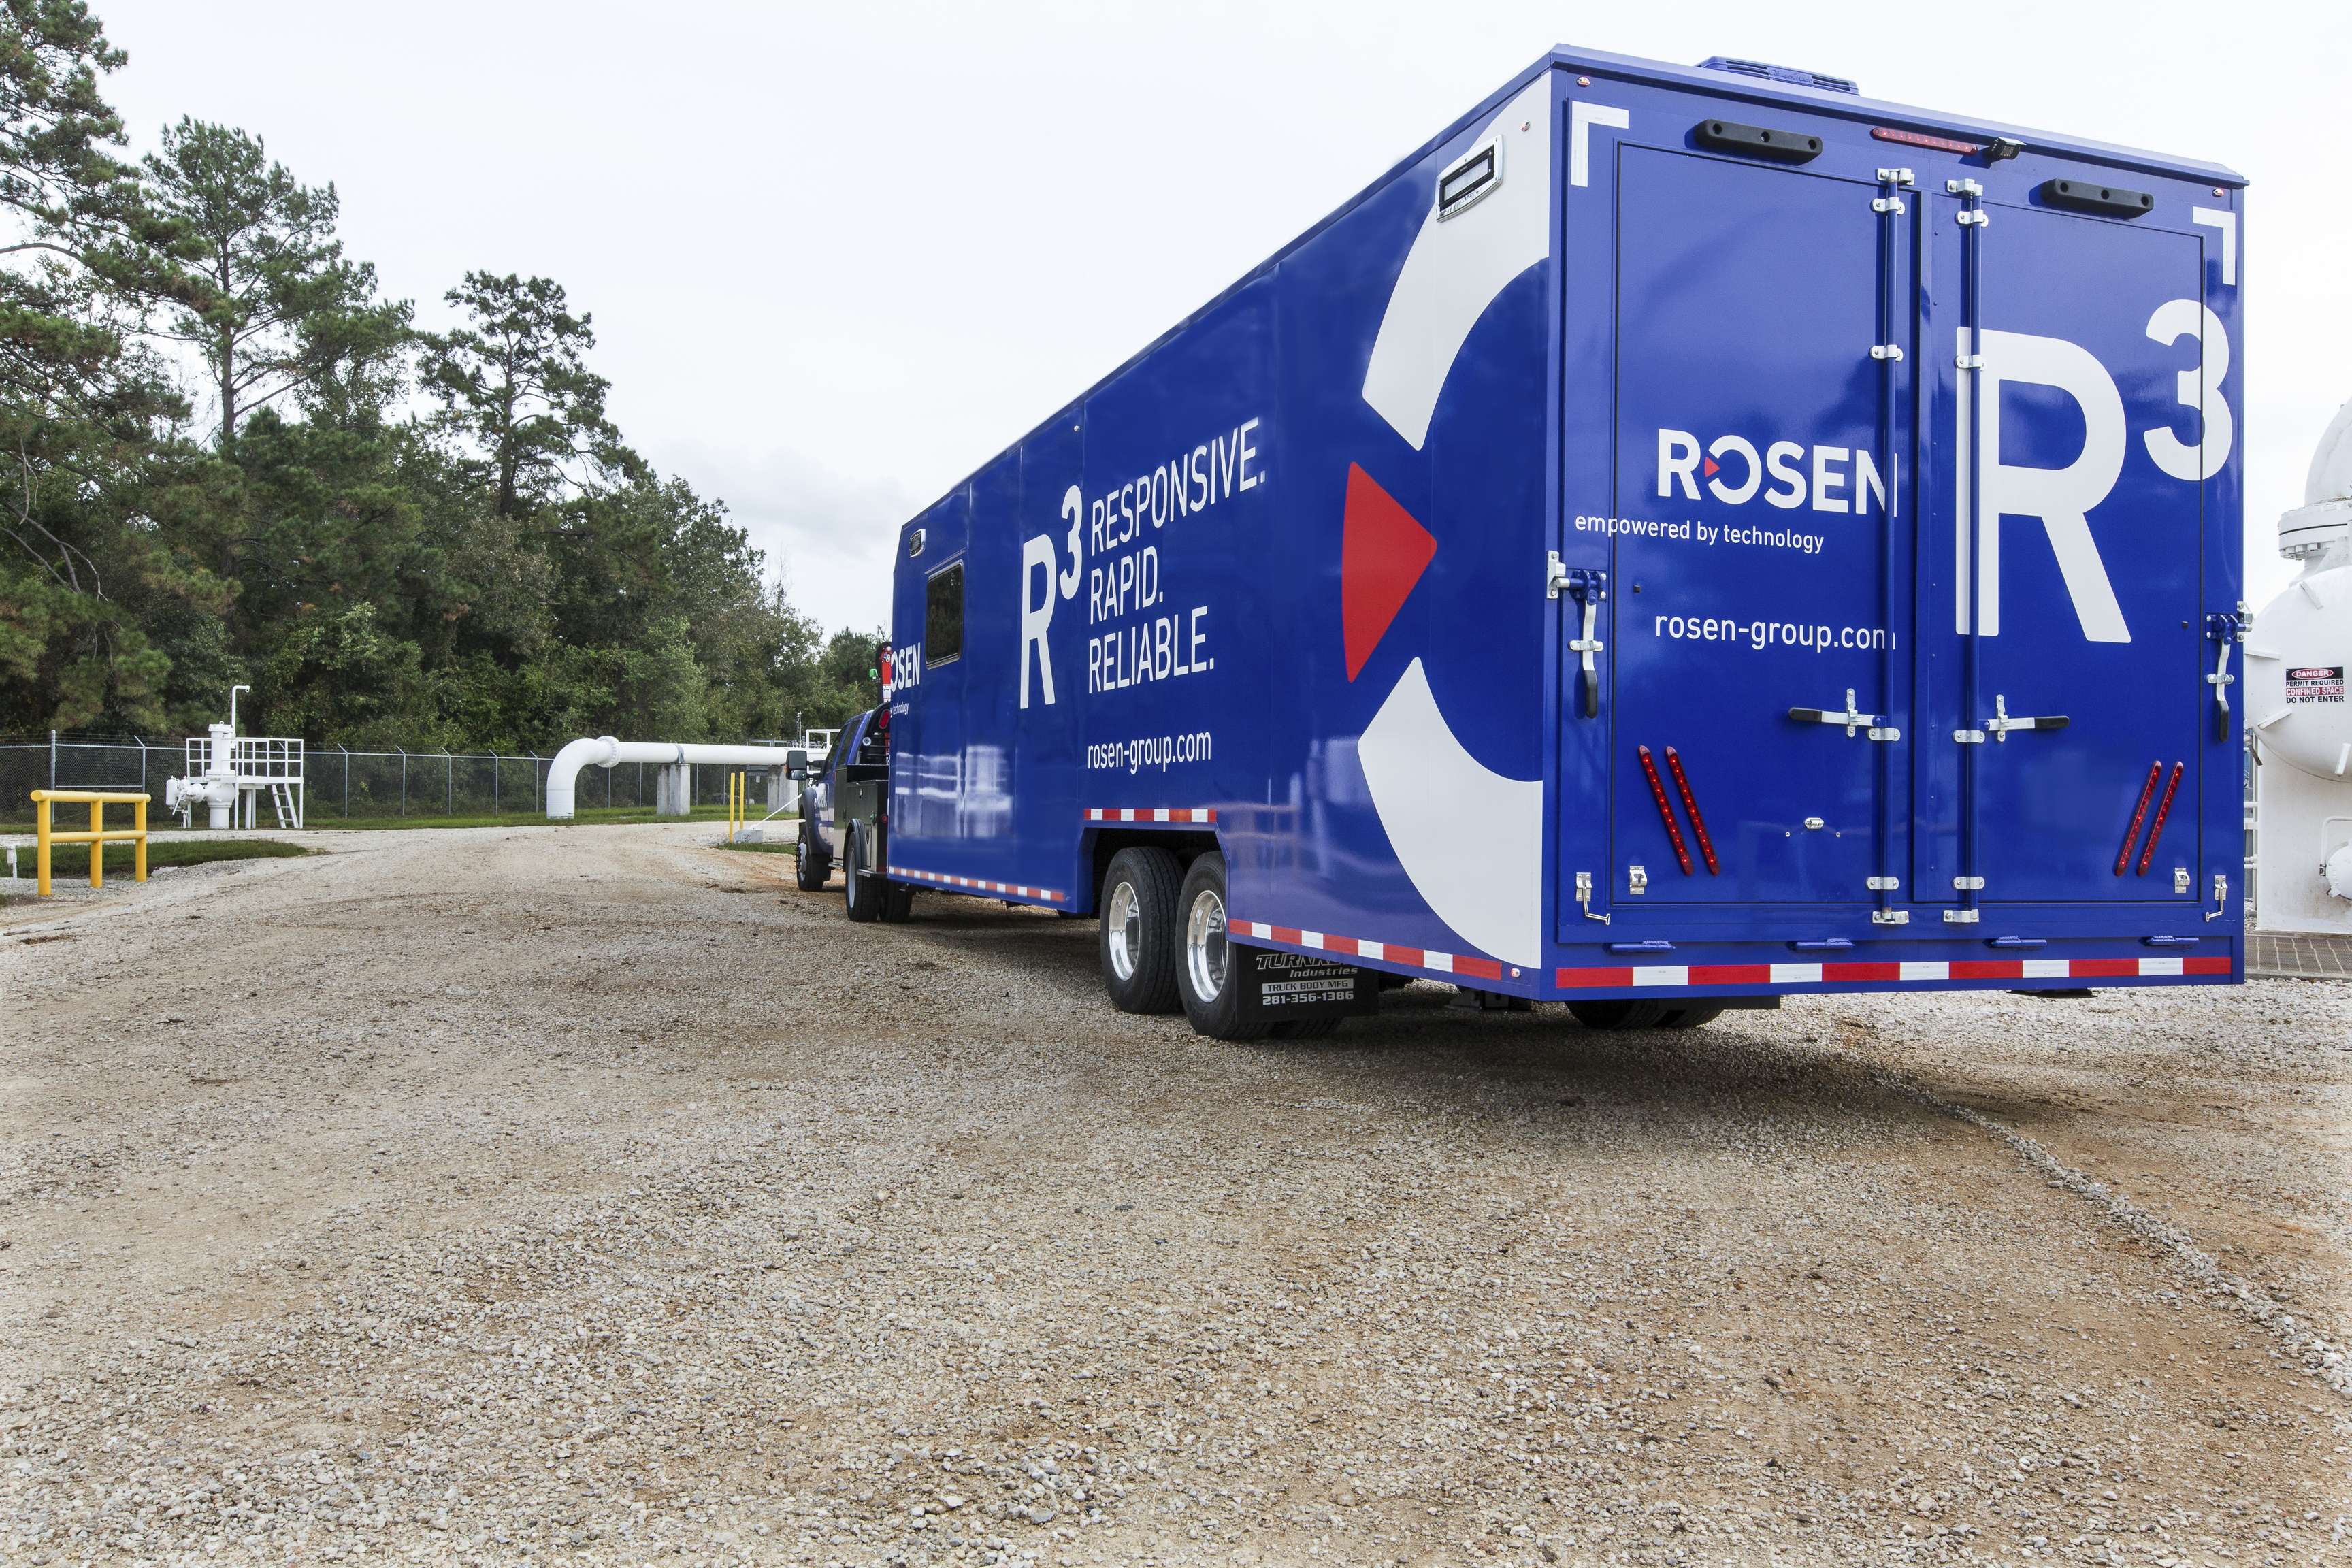 Blue mobile diagnostics unit (truck and trailer) on site.